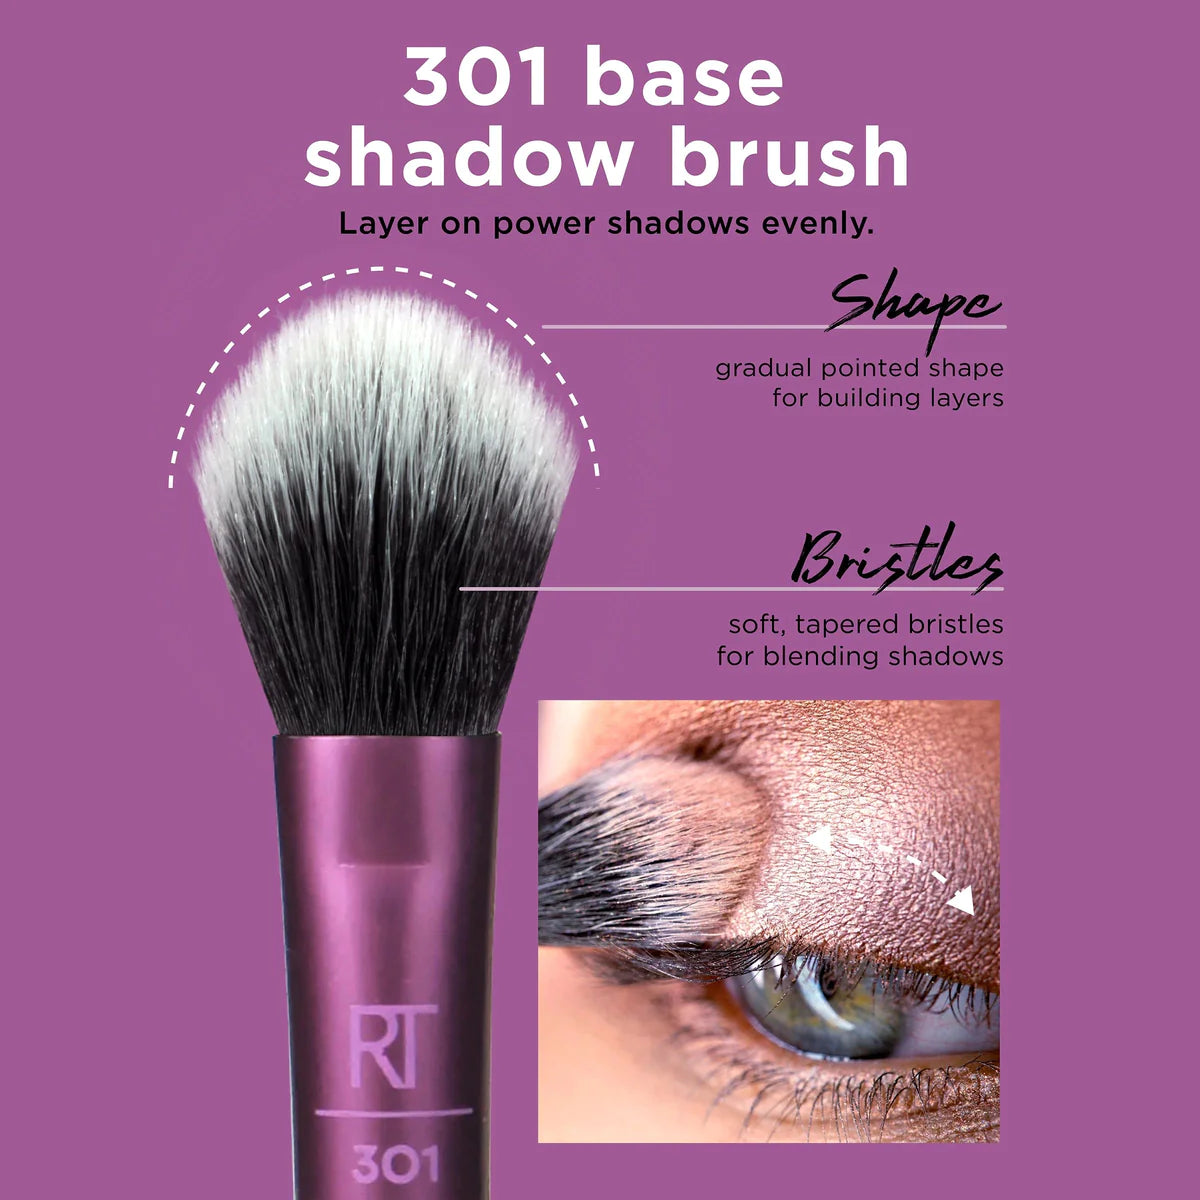 Eye Shade & Blend Makeup Brush Trio